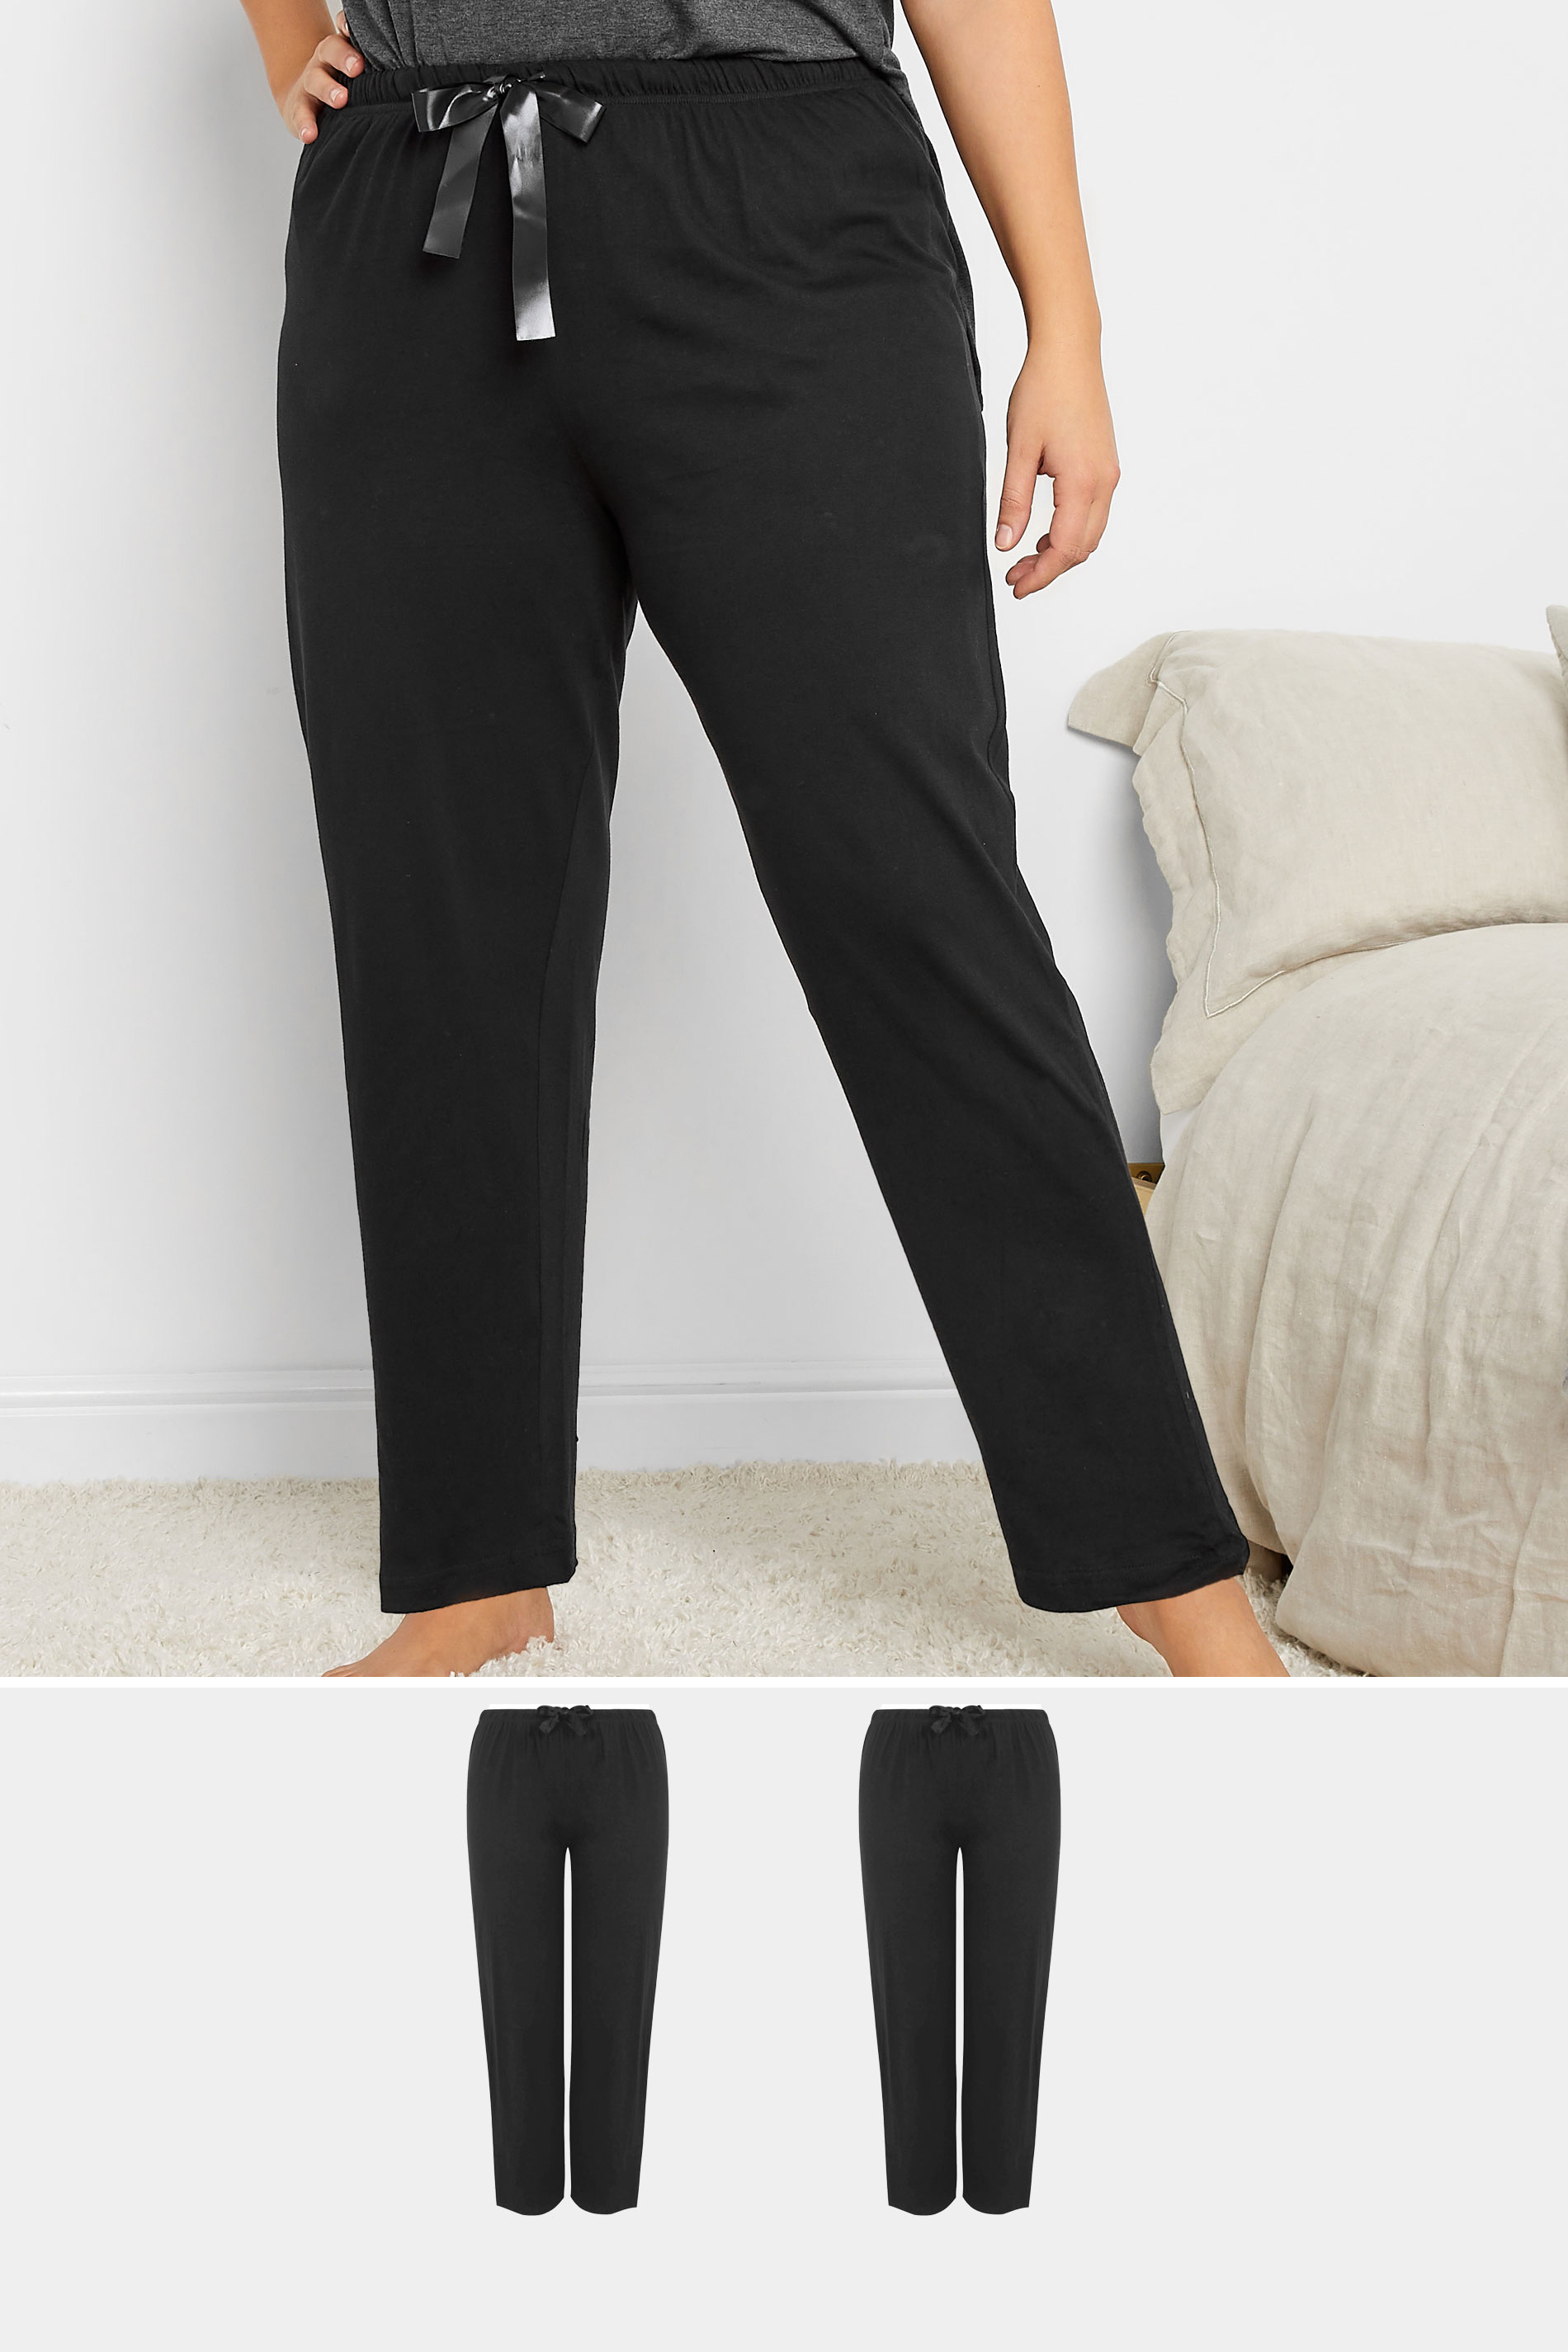 2 PACK Plus Size Black Wide Leg Pyjama Bottoms | Yours Clothing 1